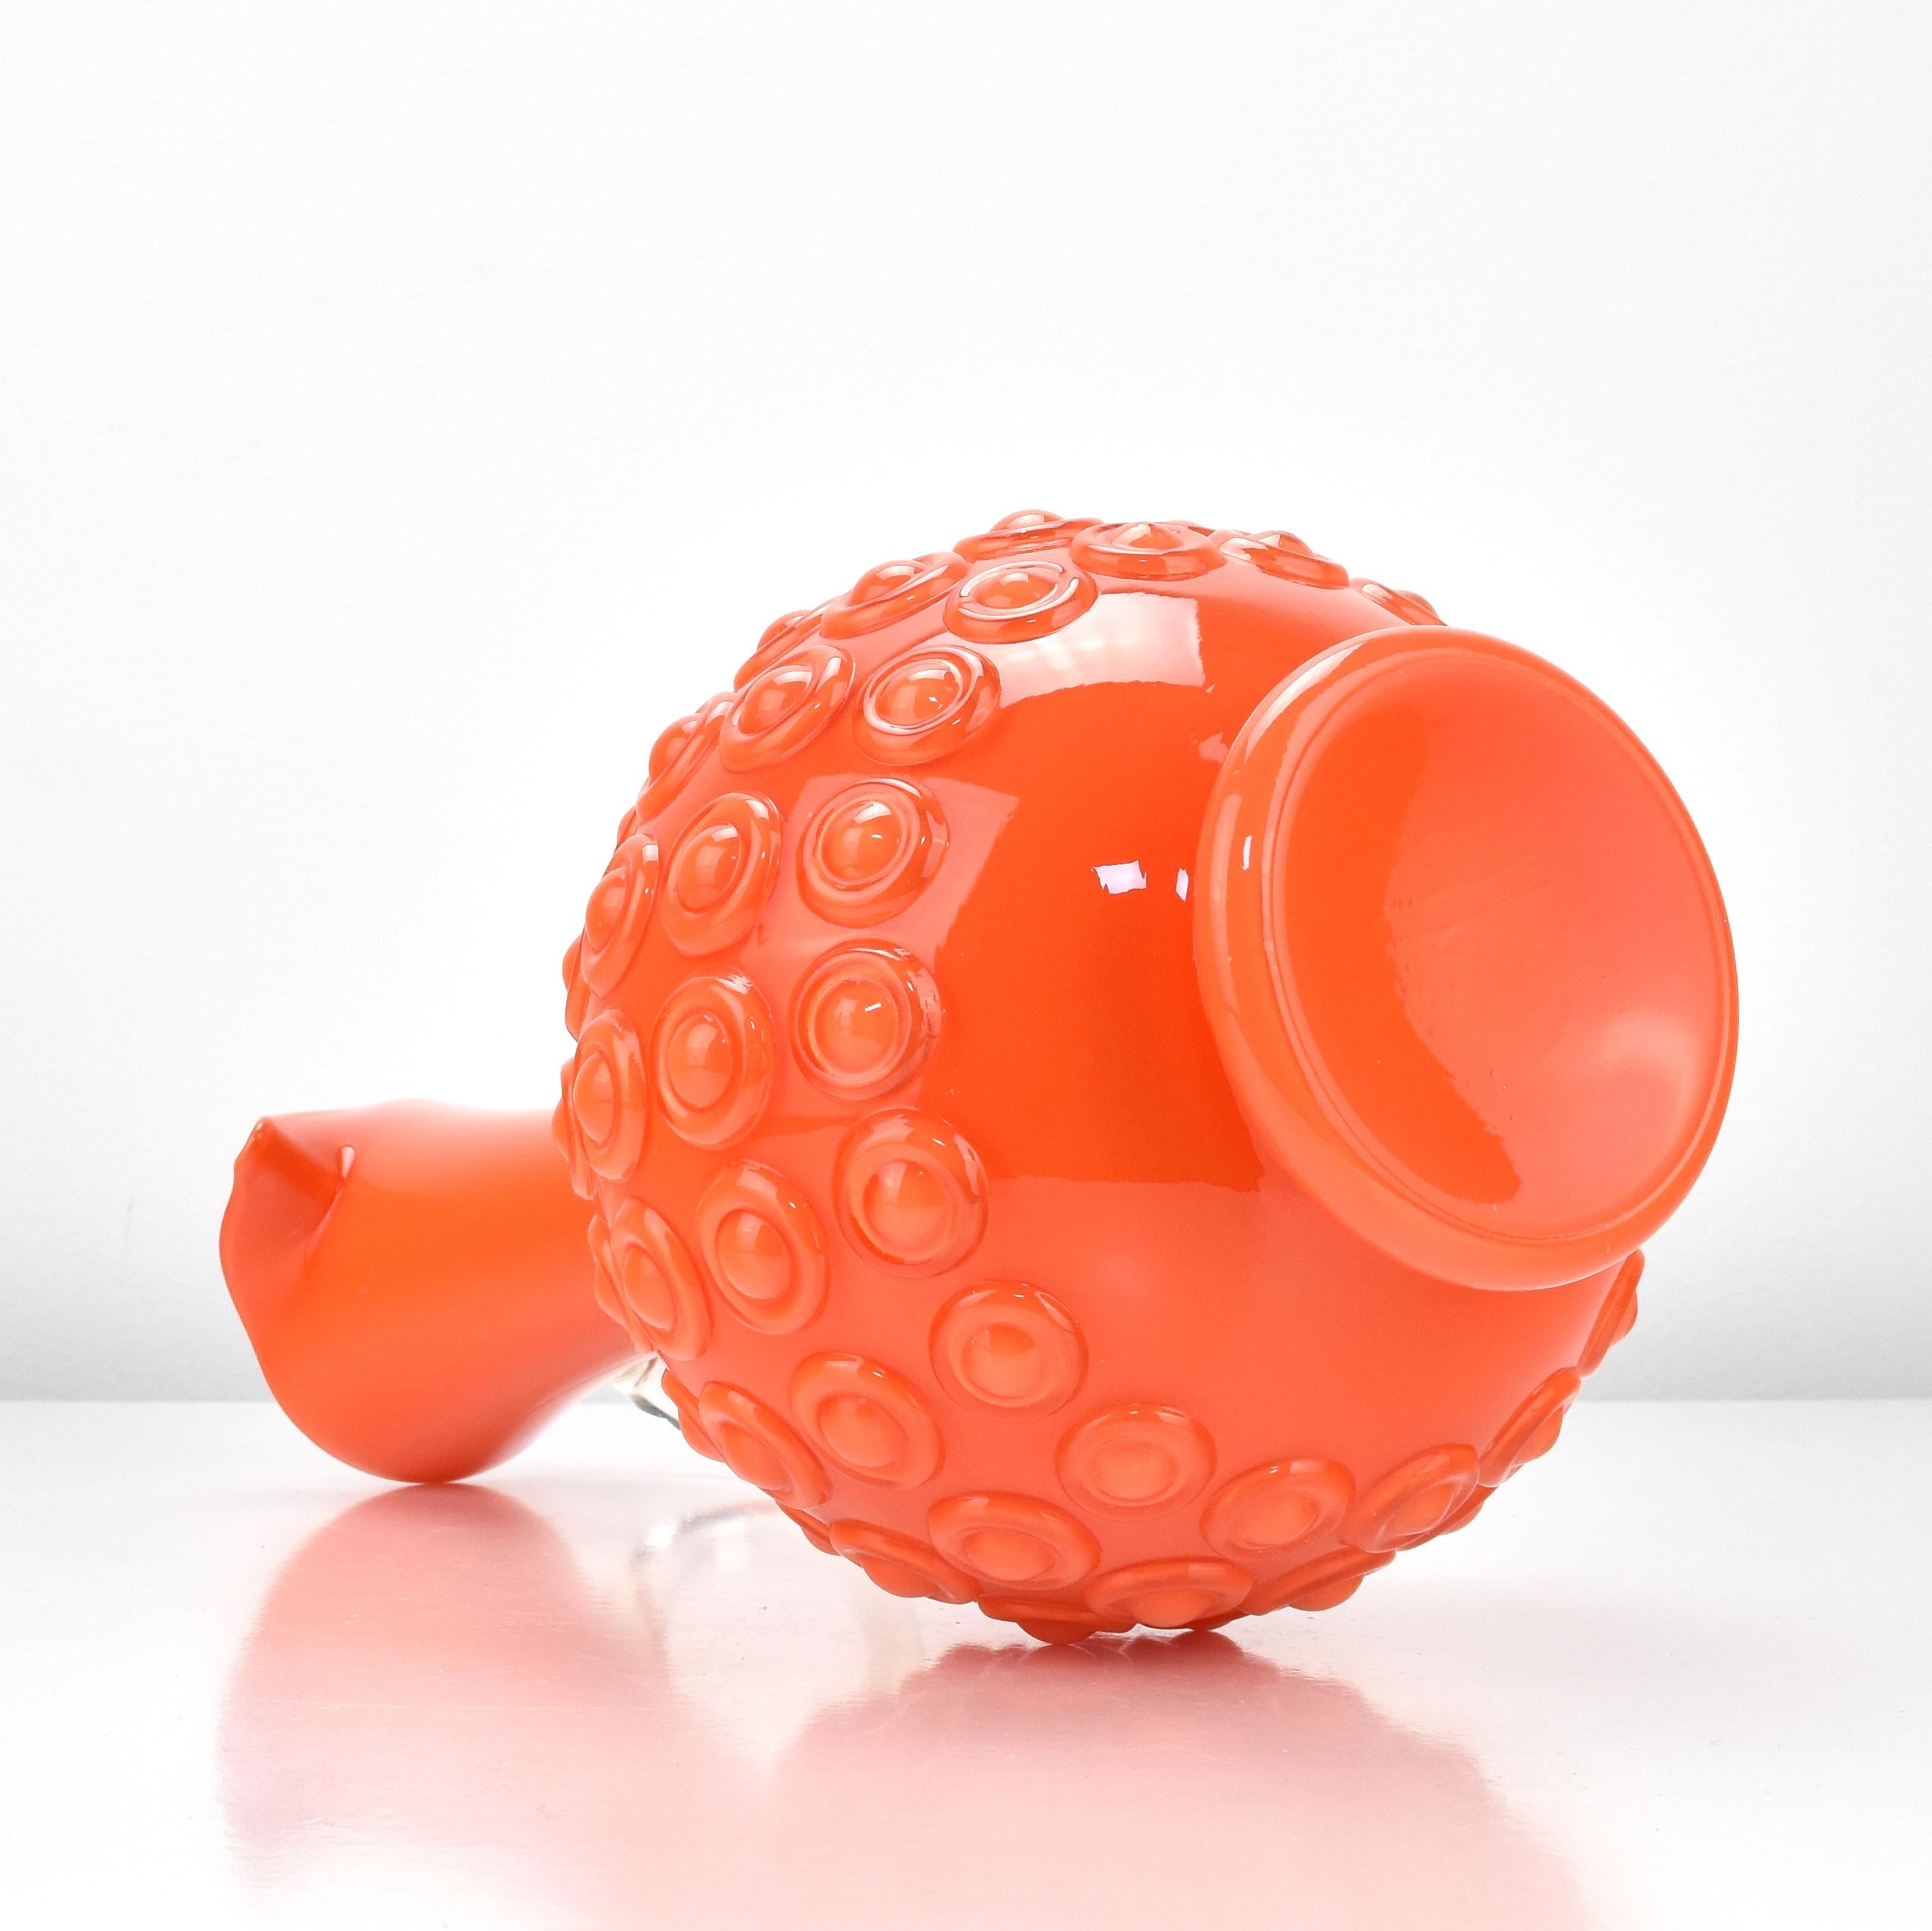 Textured Orange Art Glass Vase / Jug Empoli Opaline di Firenze Hobnail Pattern In Good Condition For Sale In Bad Säckingen, DE